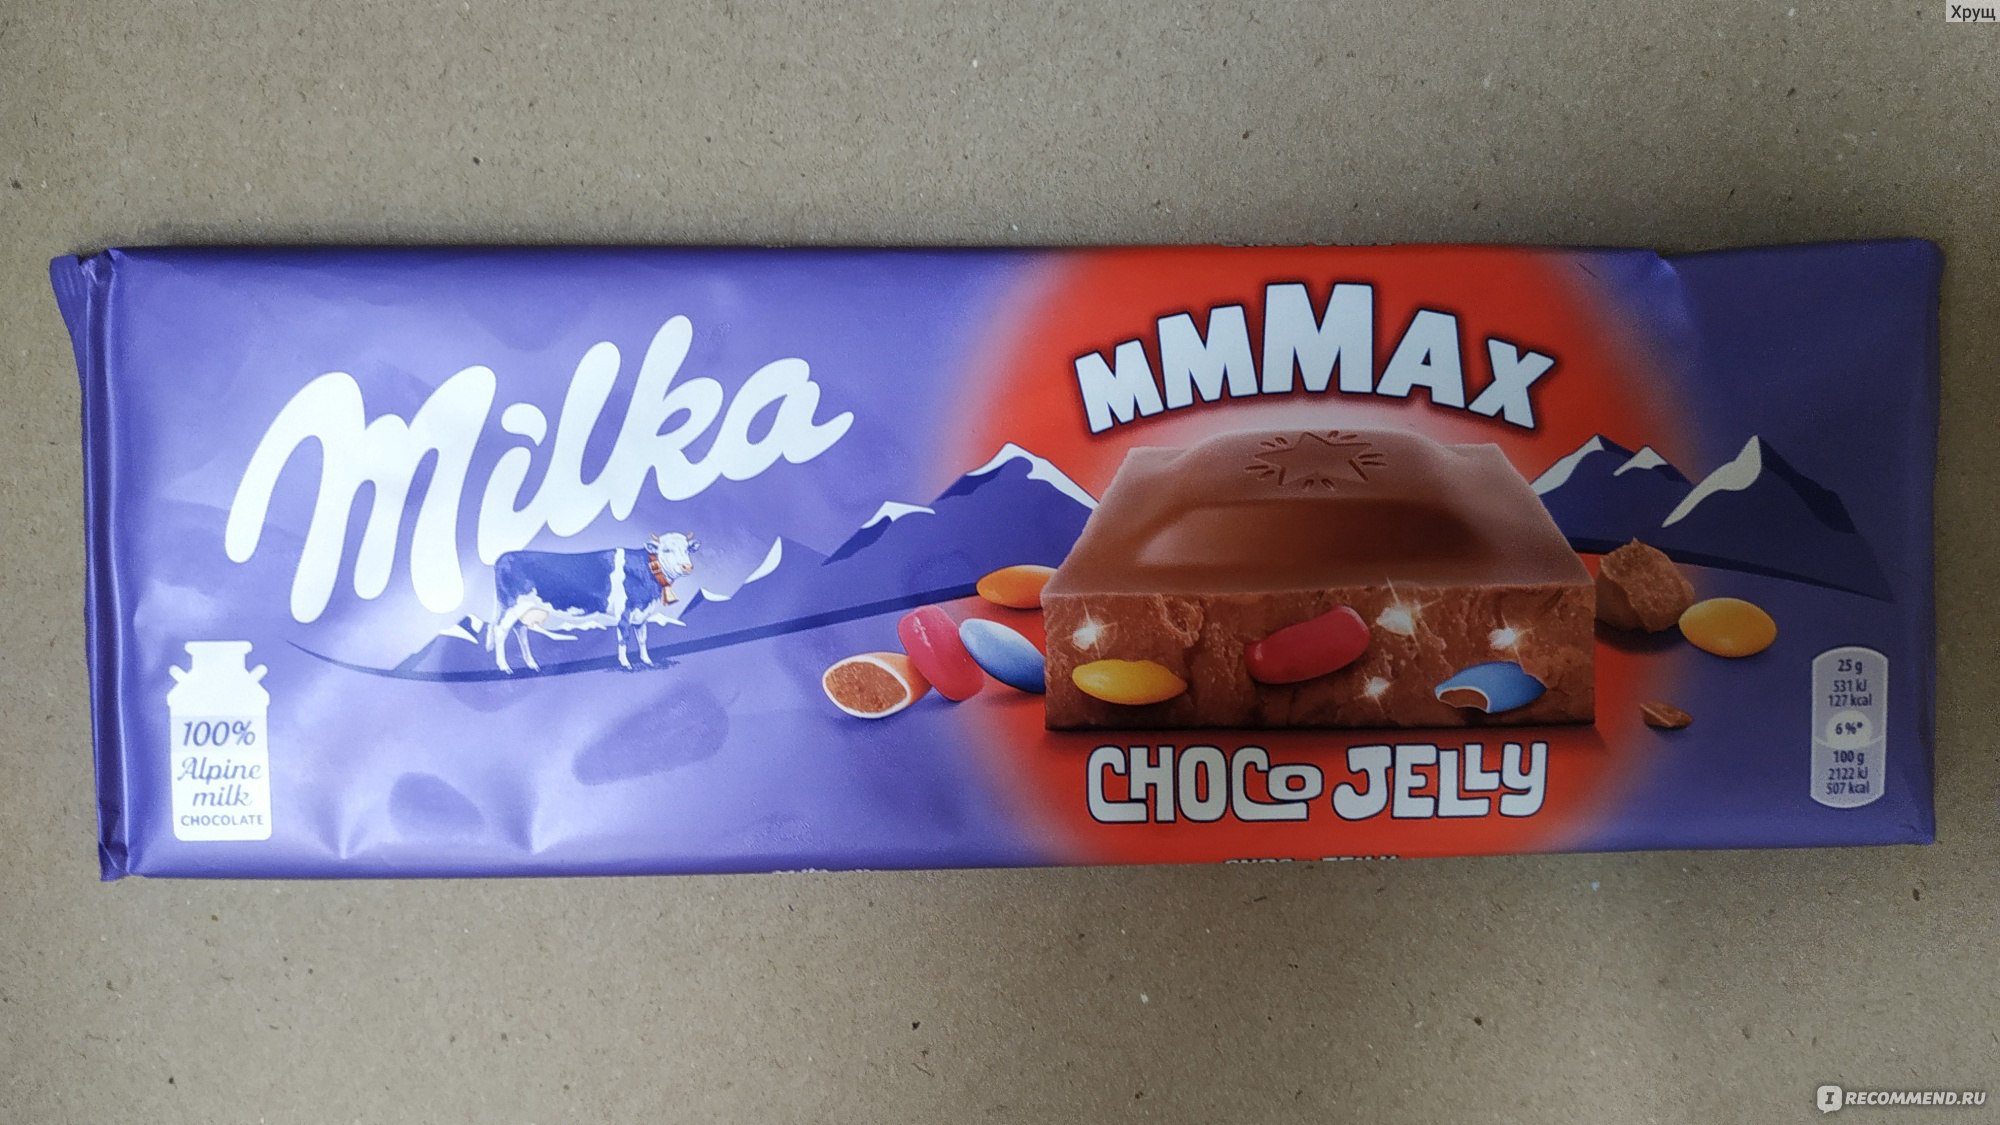 Choco jelly. Милка Чоко Джелли 250 гр. Шоколад "Milka". Шоколадка Милка 250 грамм. Шоколад Милка Jelly.